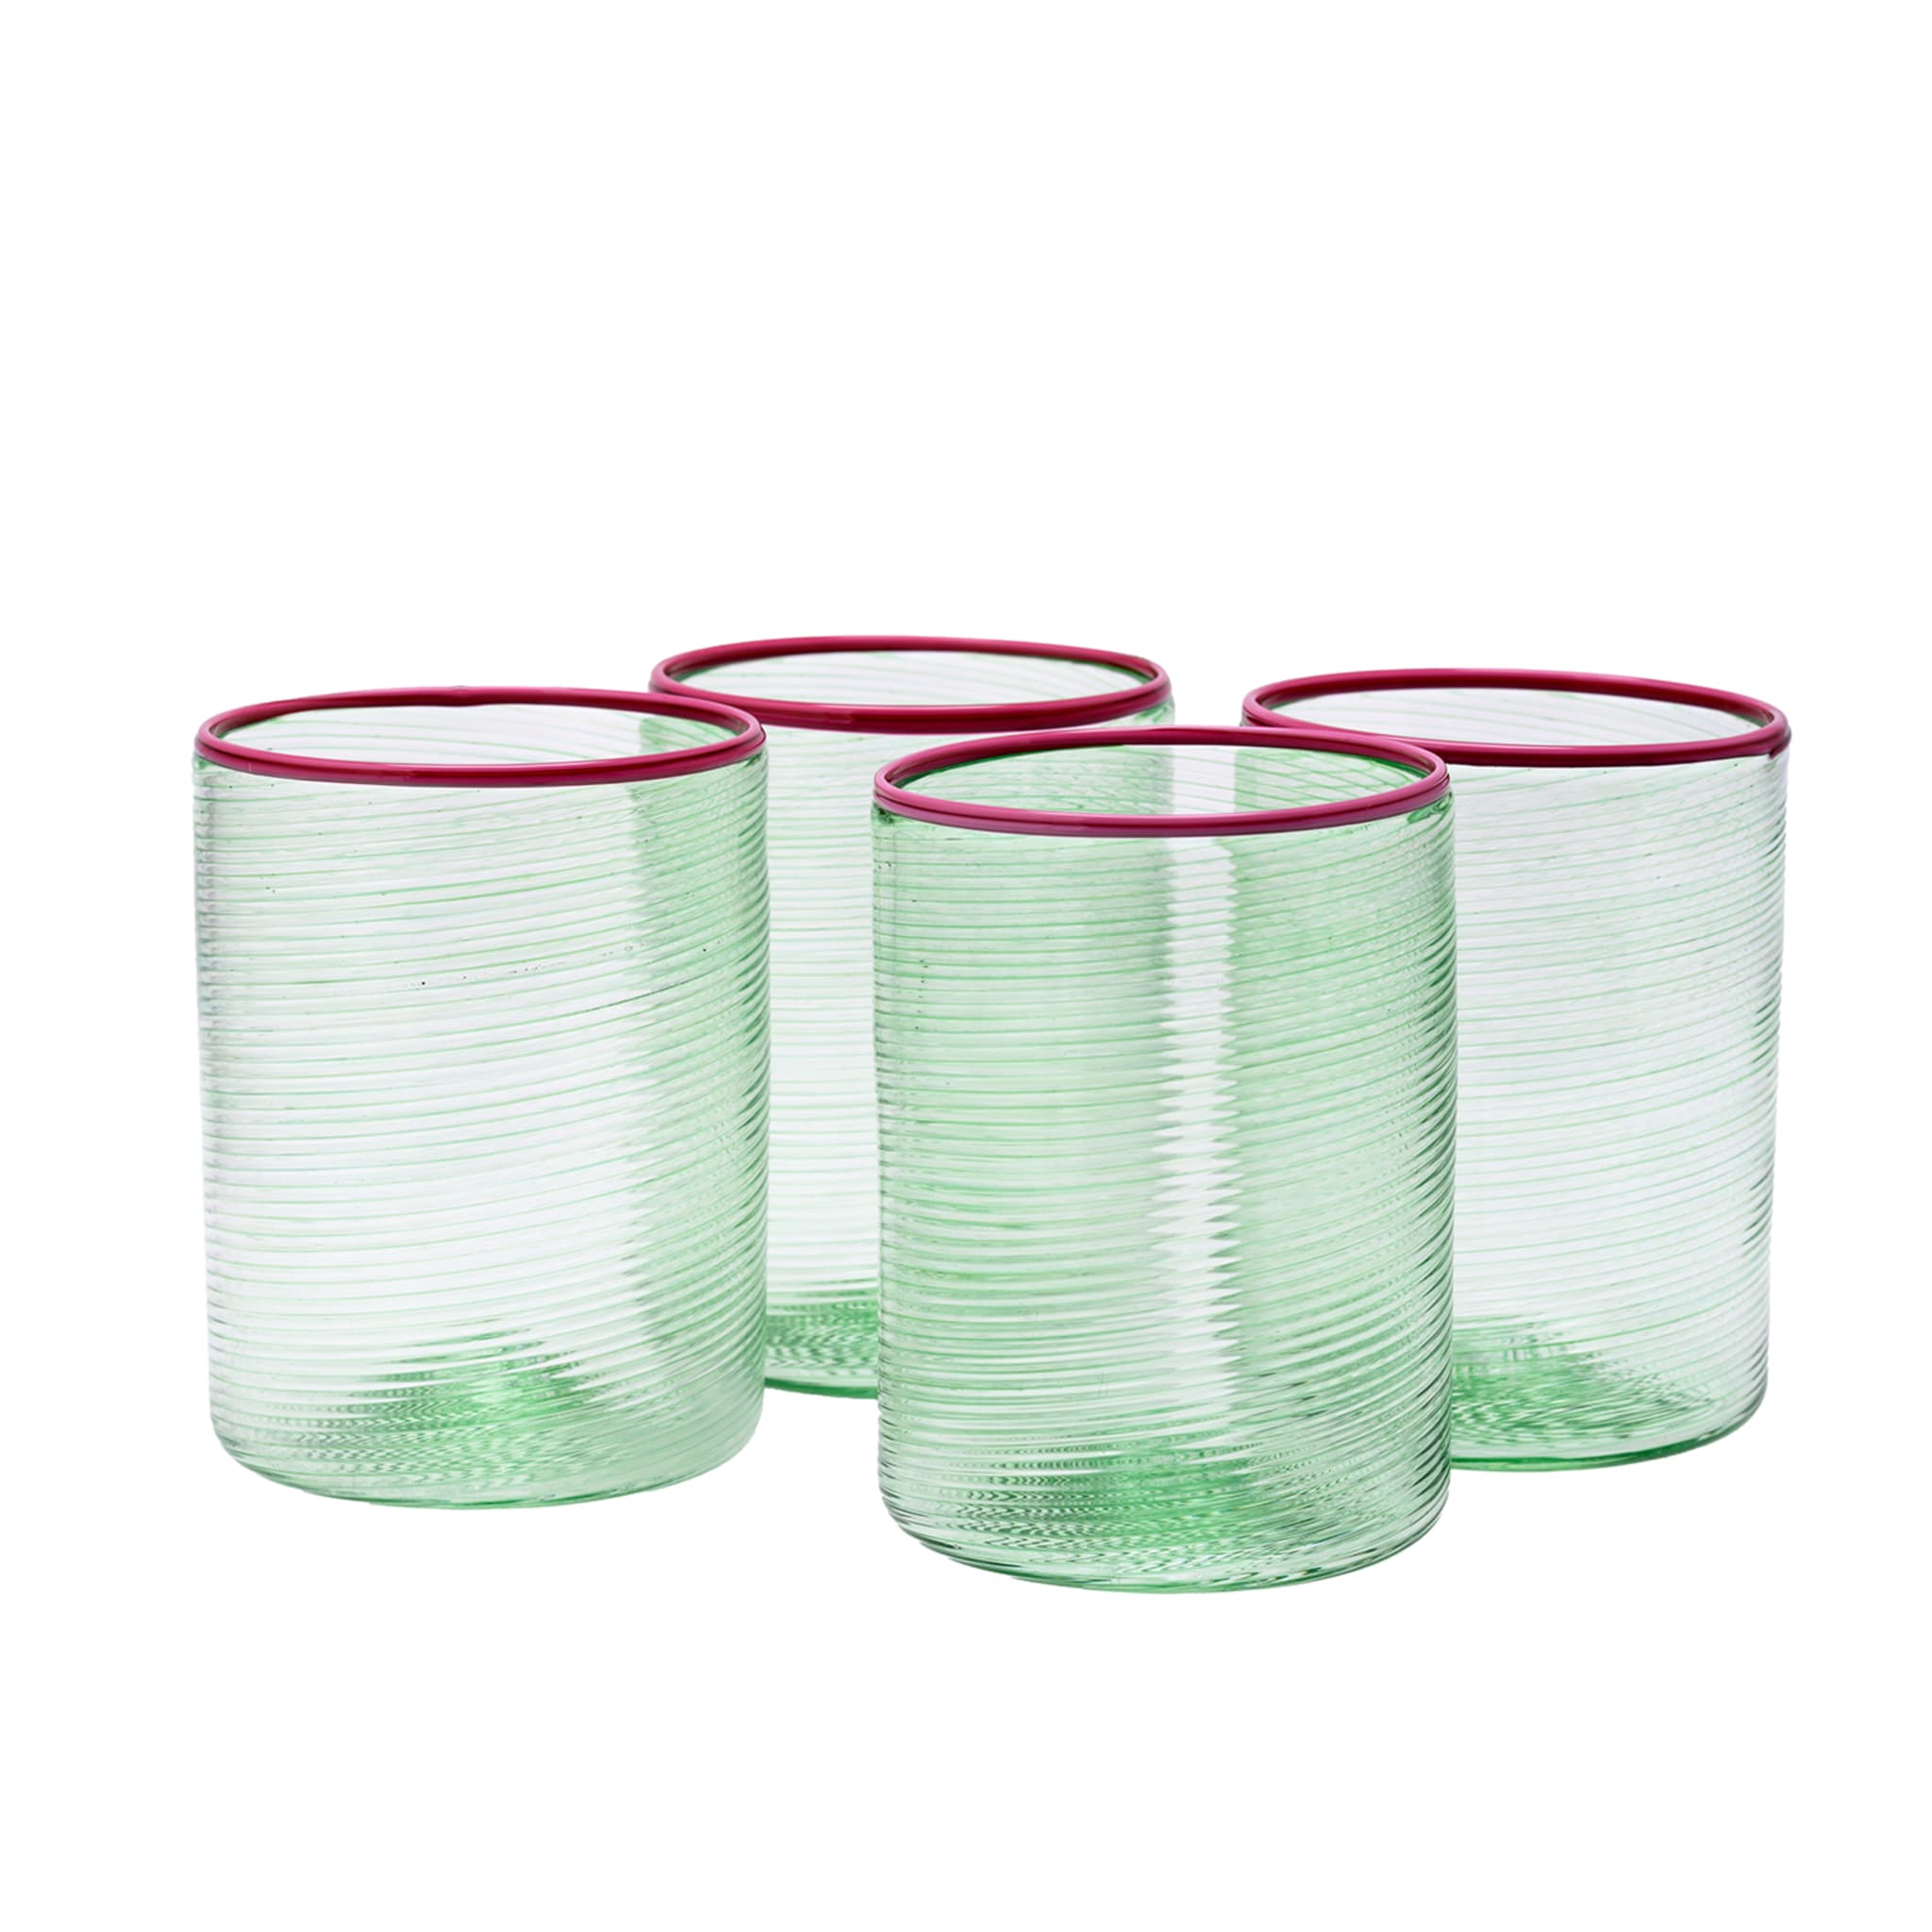 SET of 6 Fizzy Green Murano Glasses - Alternative view 1